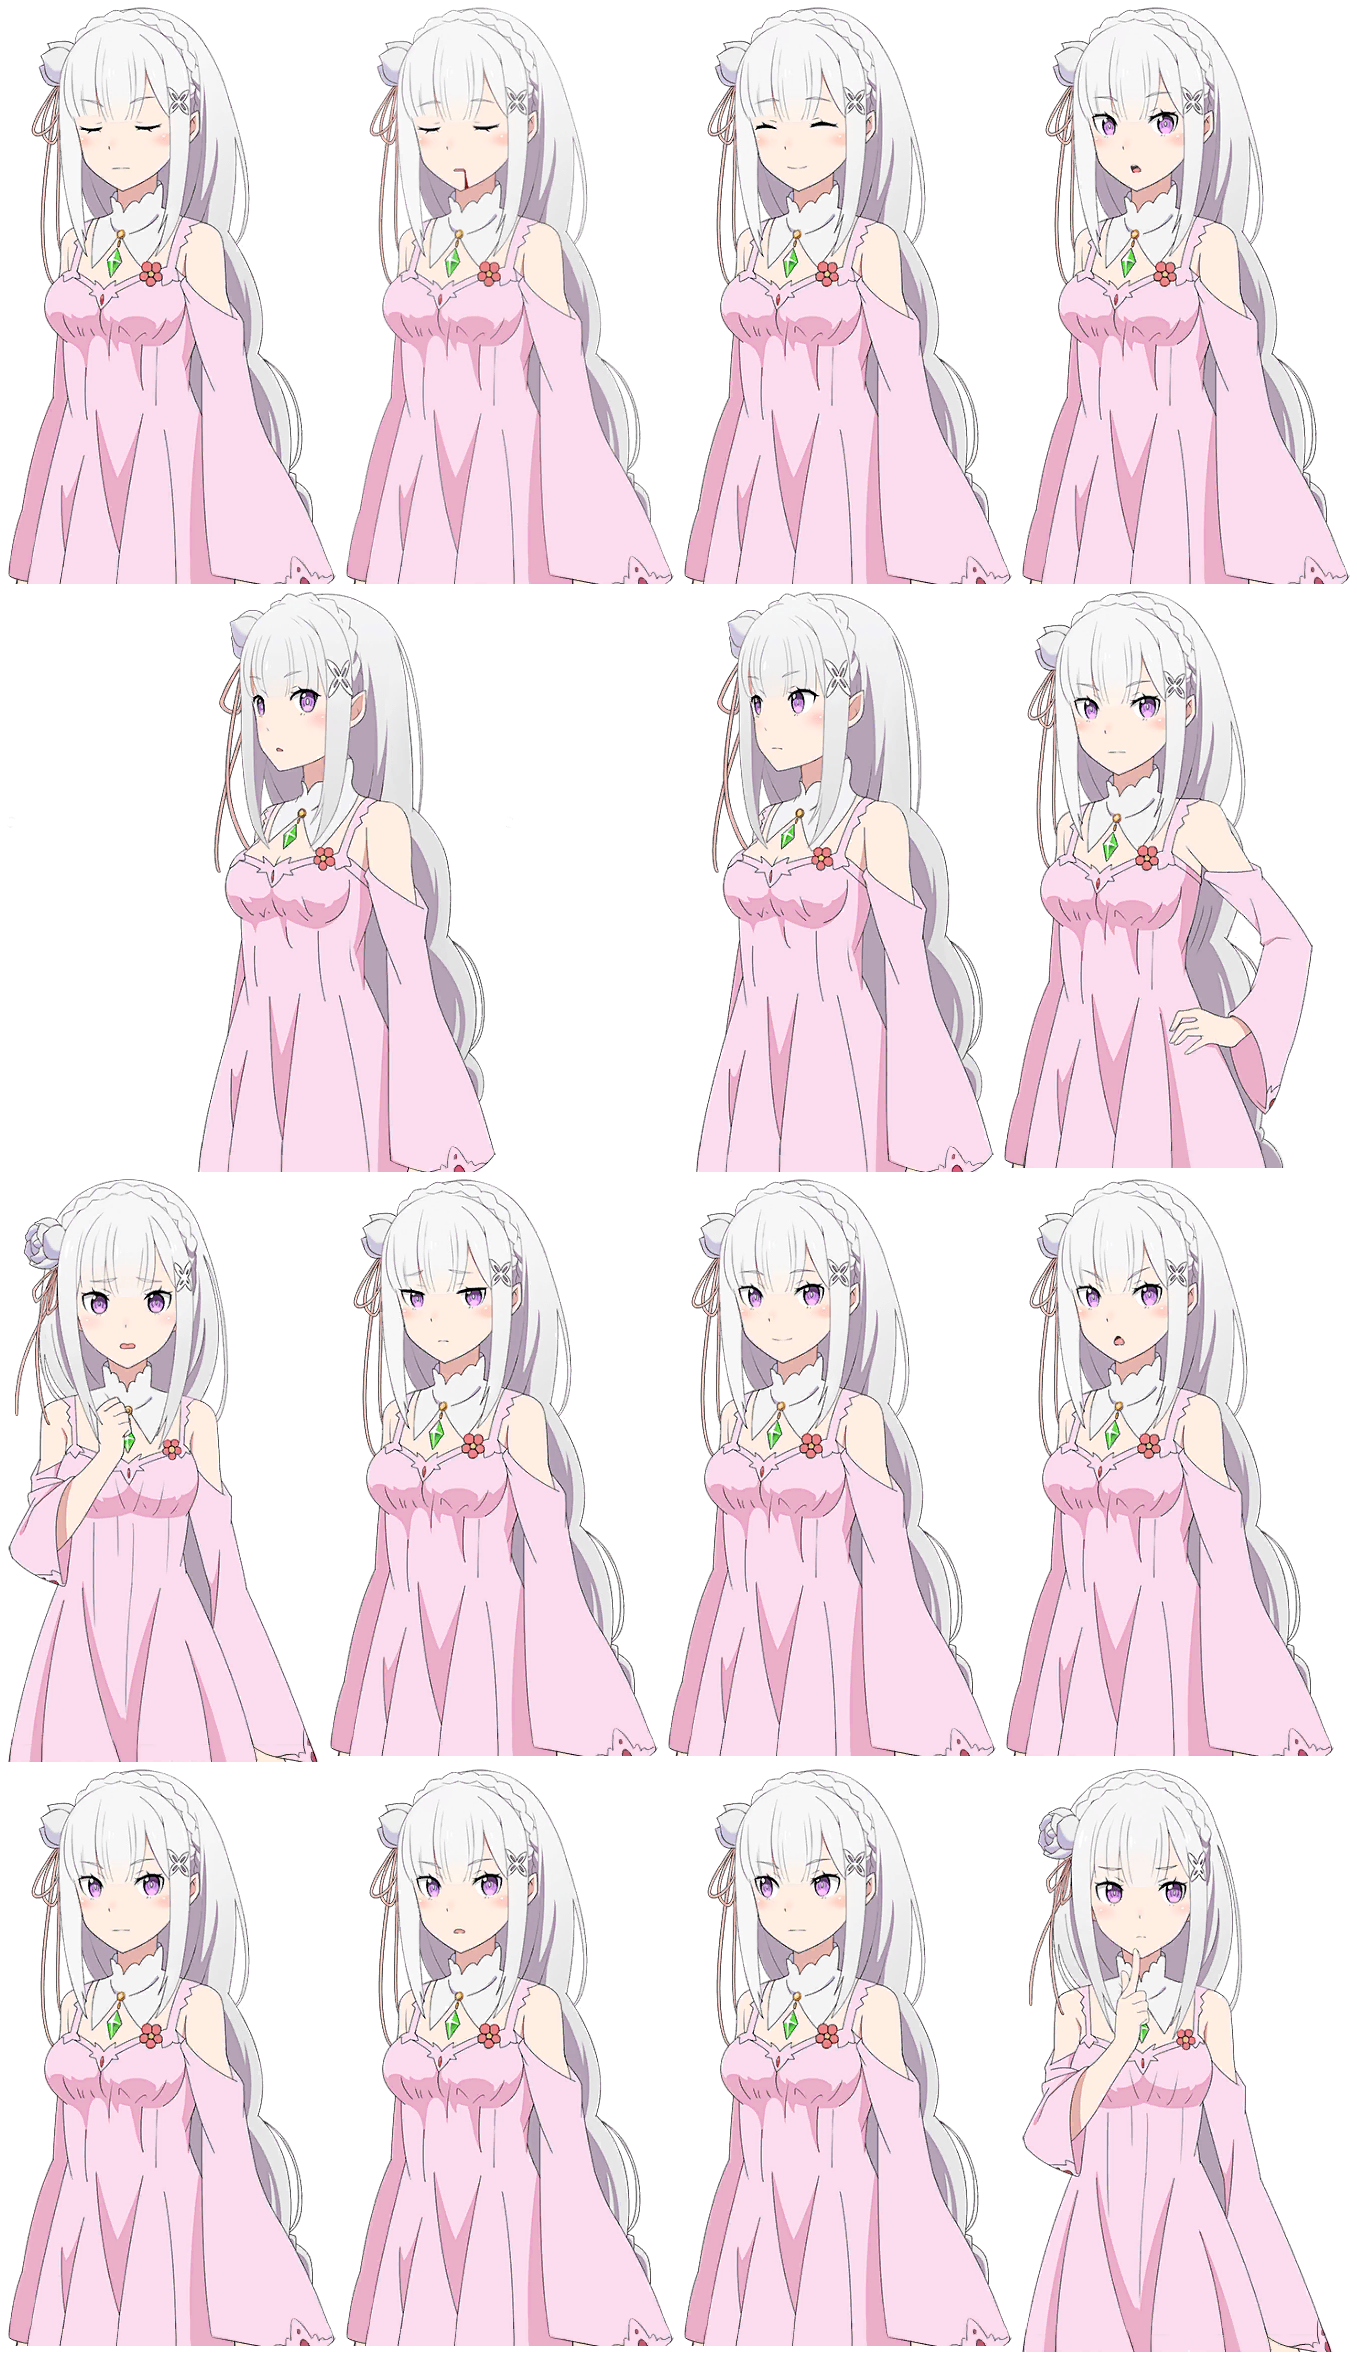 Emilia (Alternate Outfit 1)